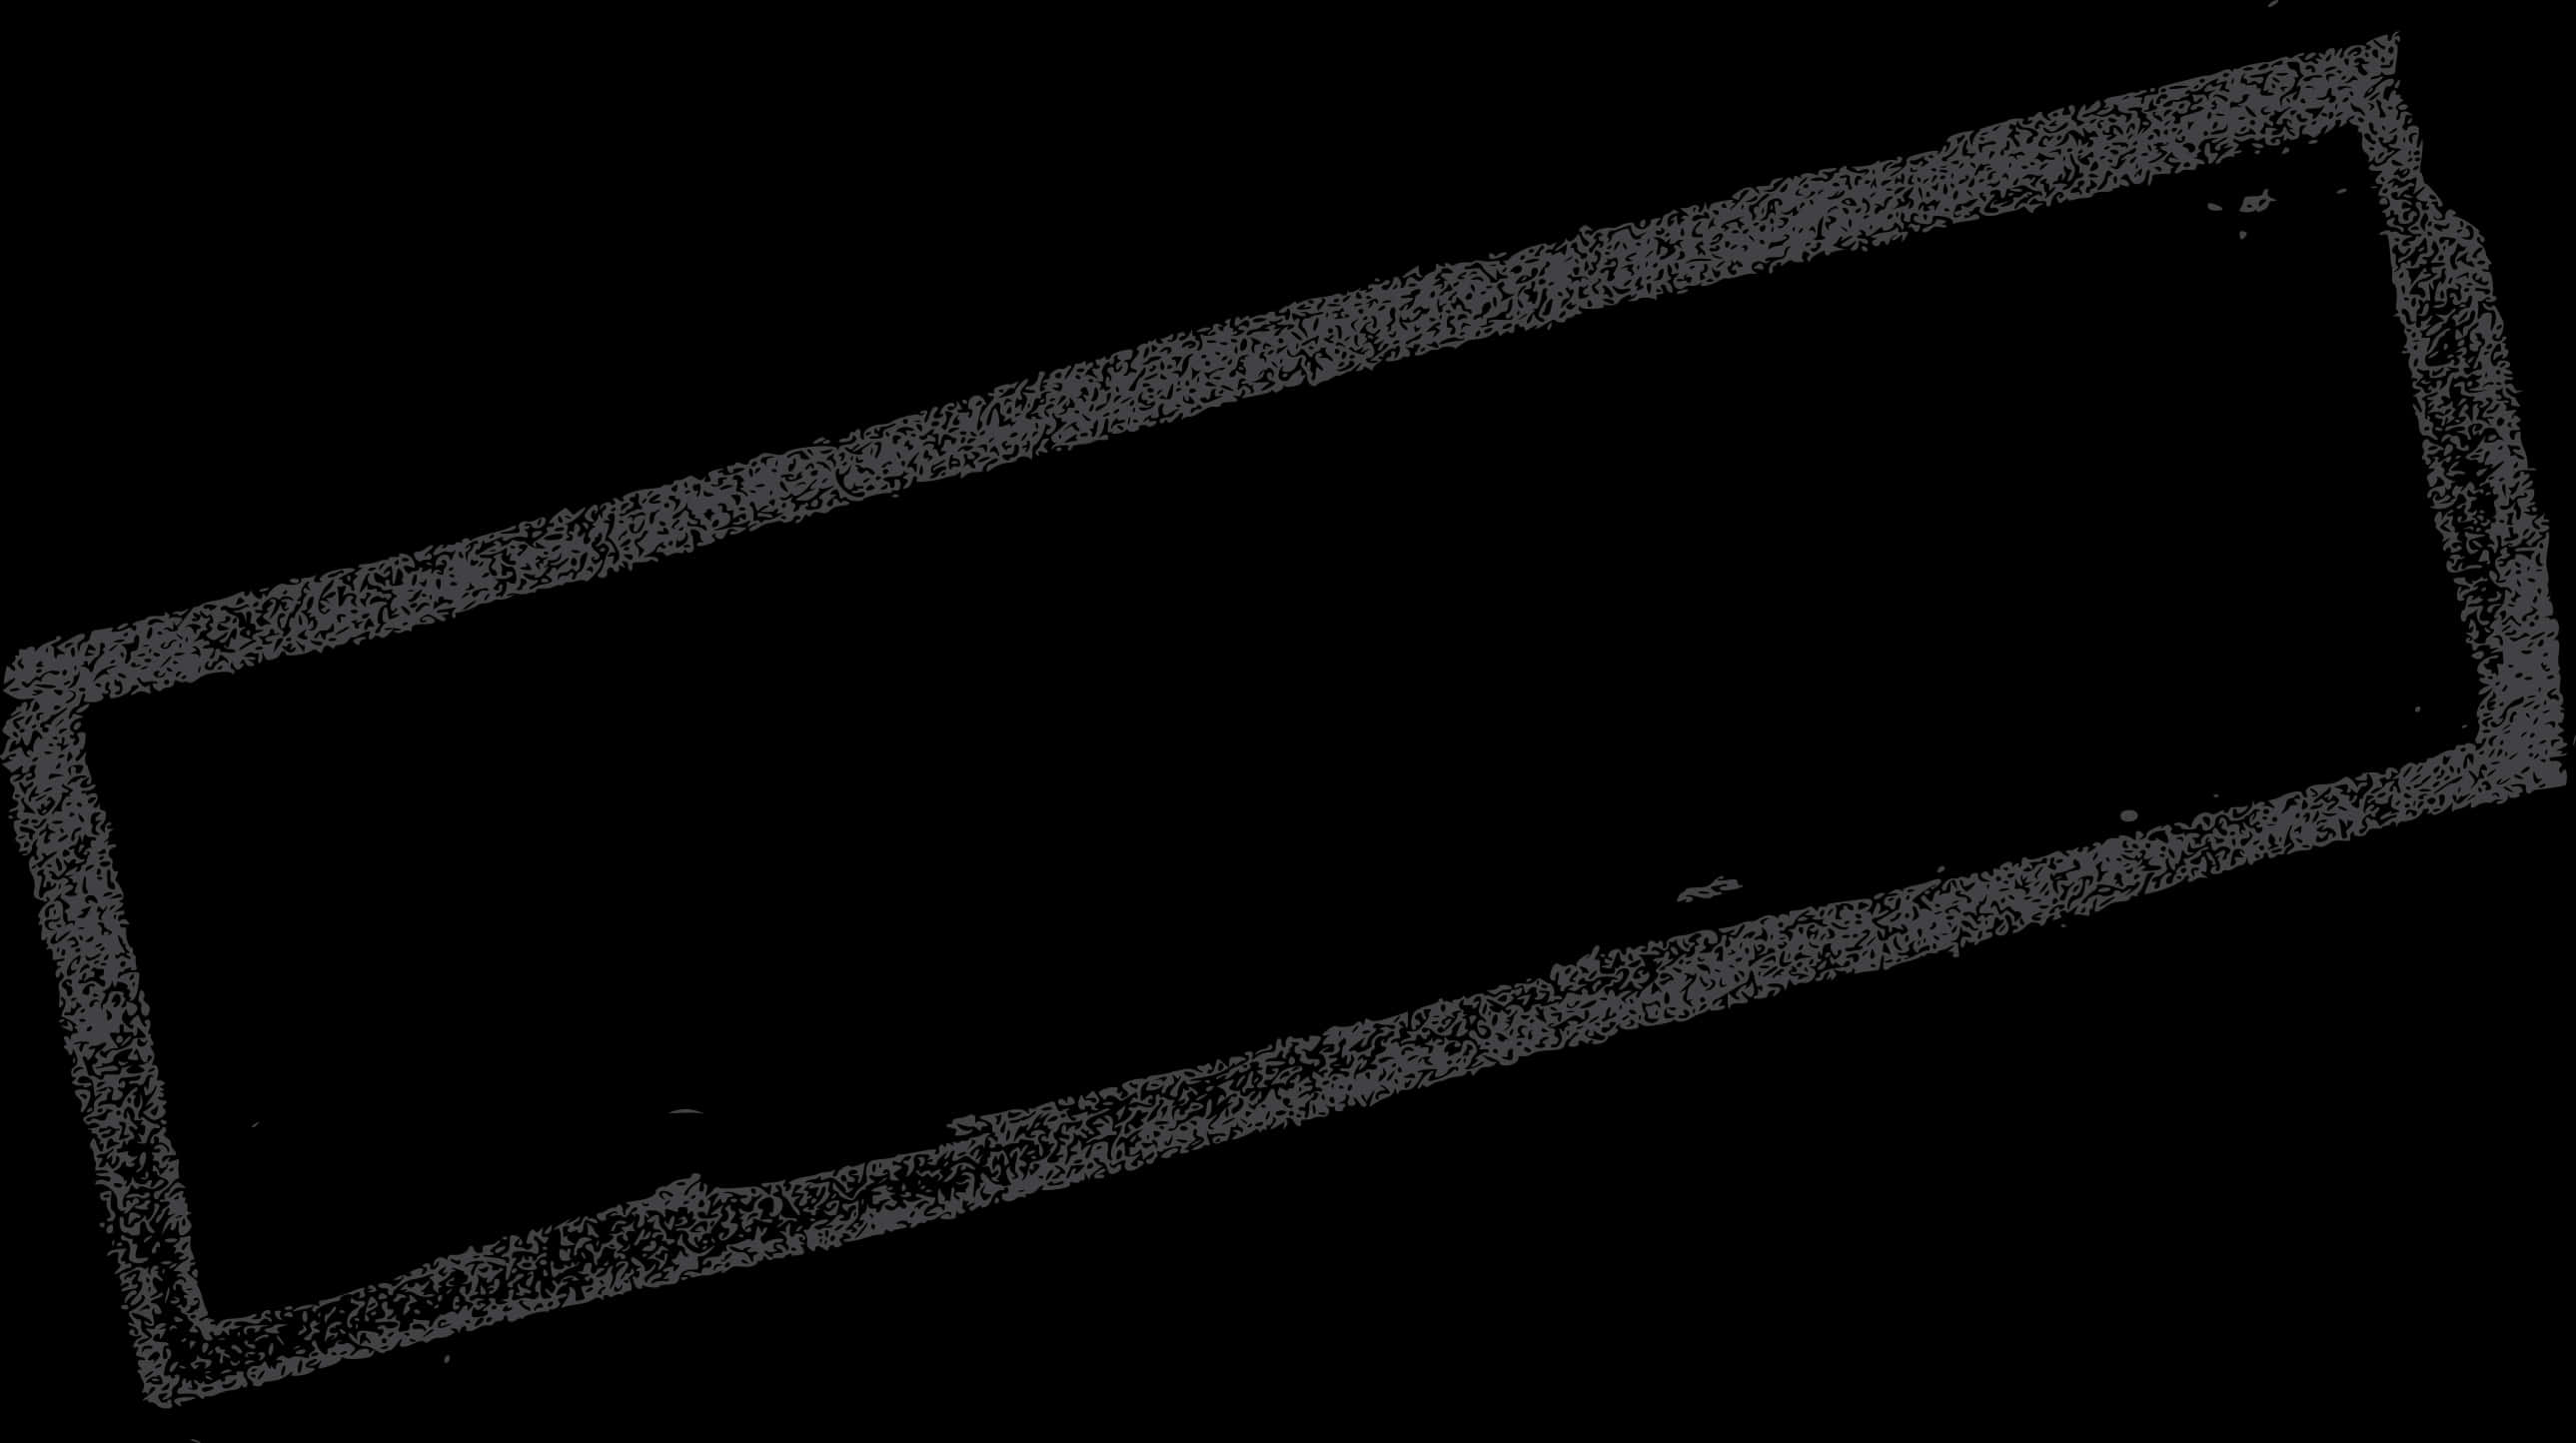 A Rectangular White Line On A Black Background